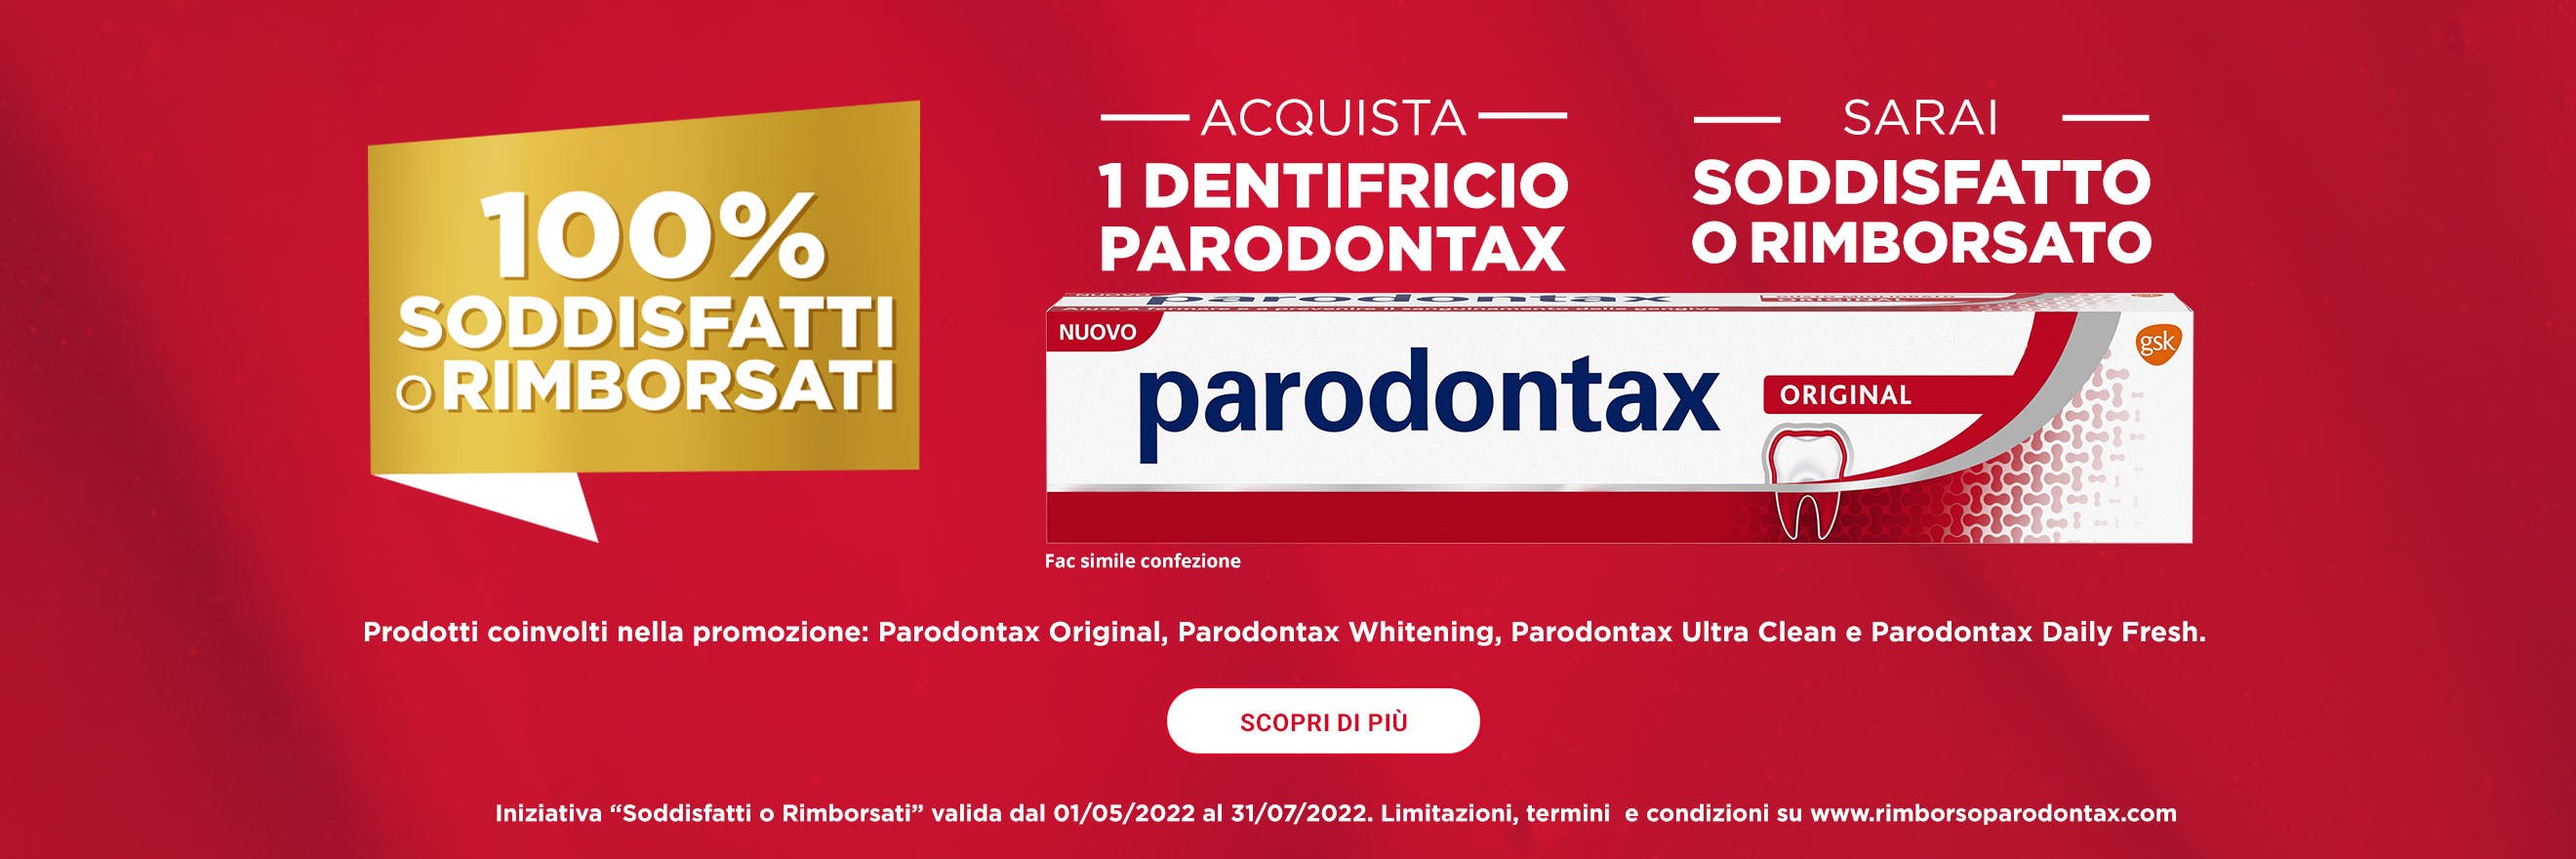 parodontax-original